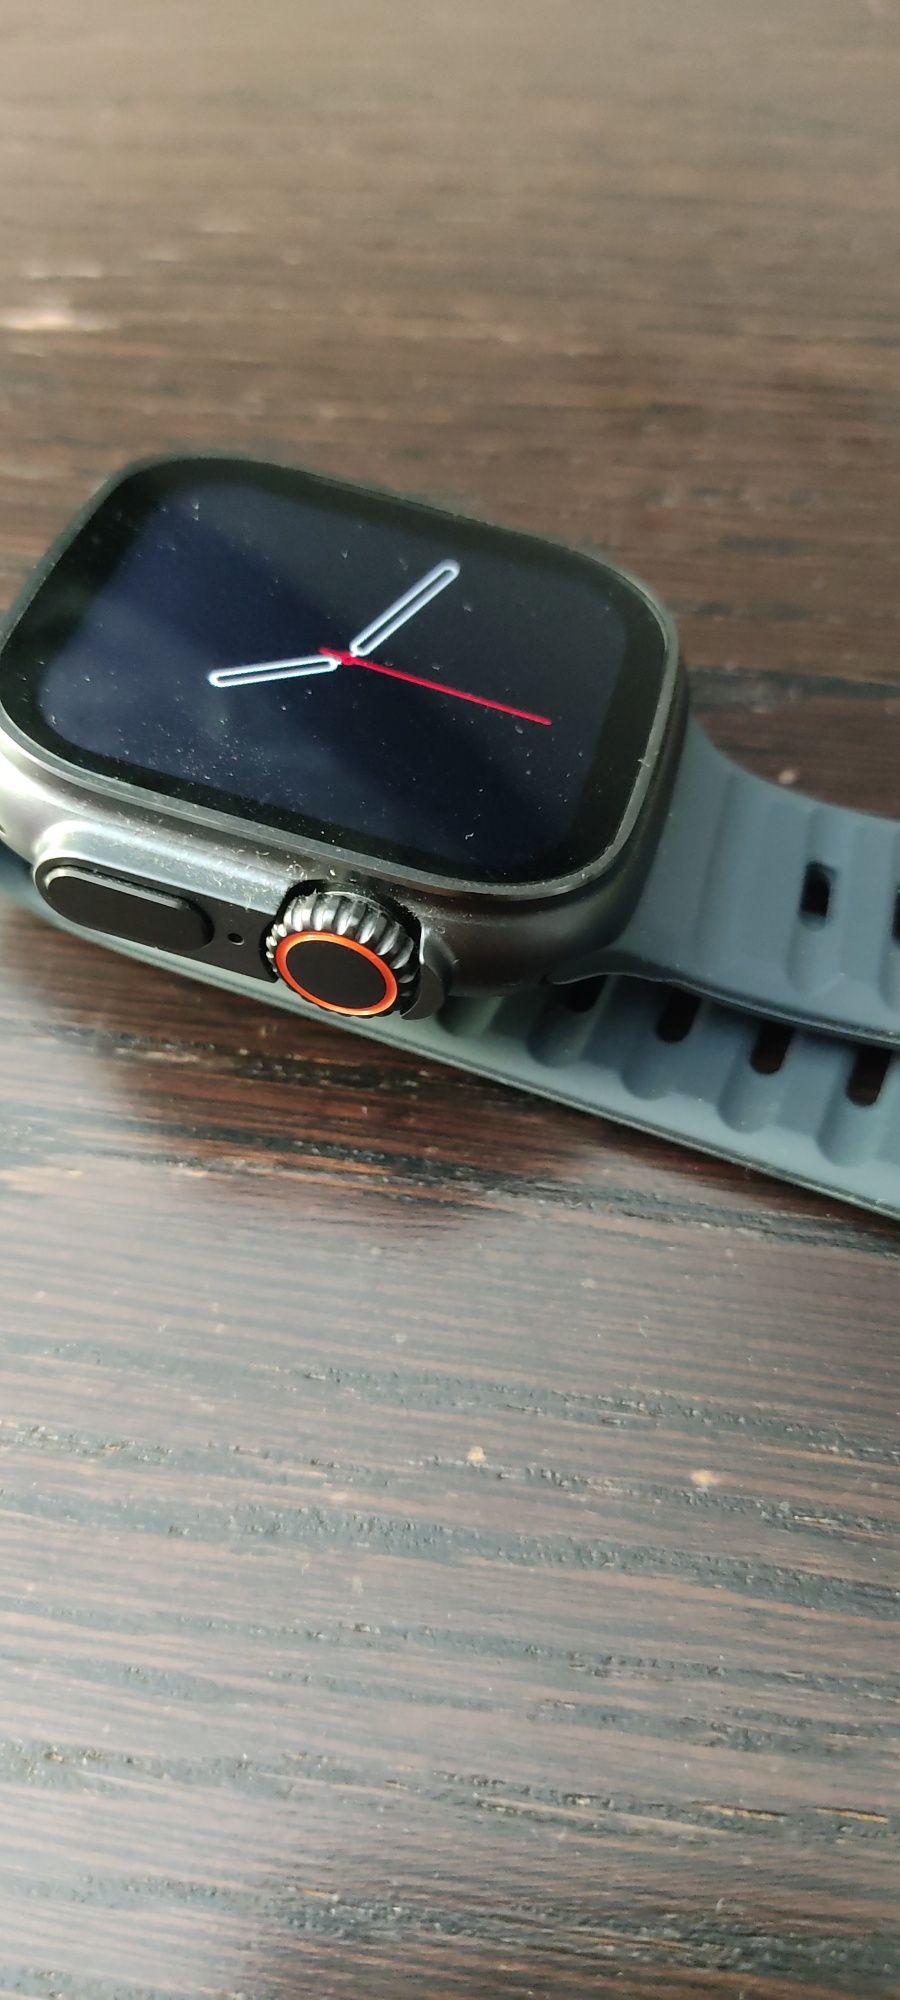 Smartwatch DT8 ultra